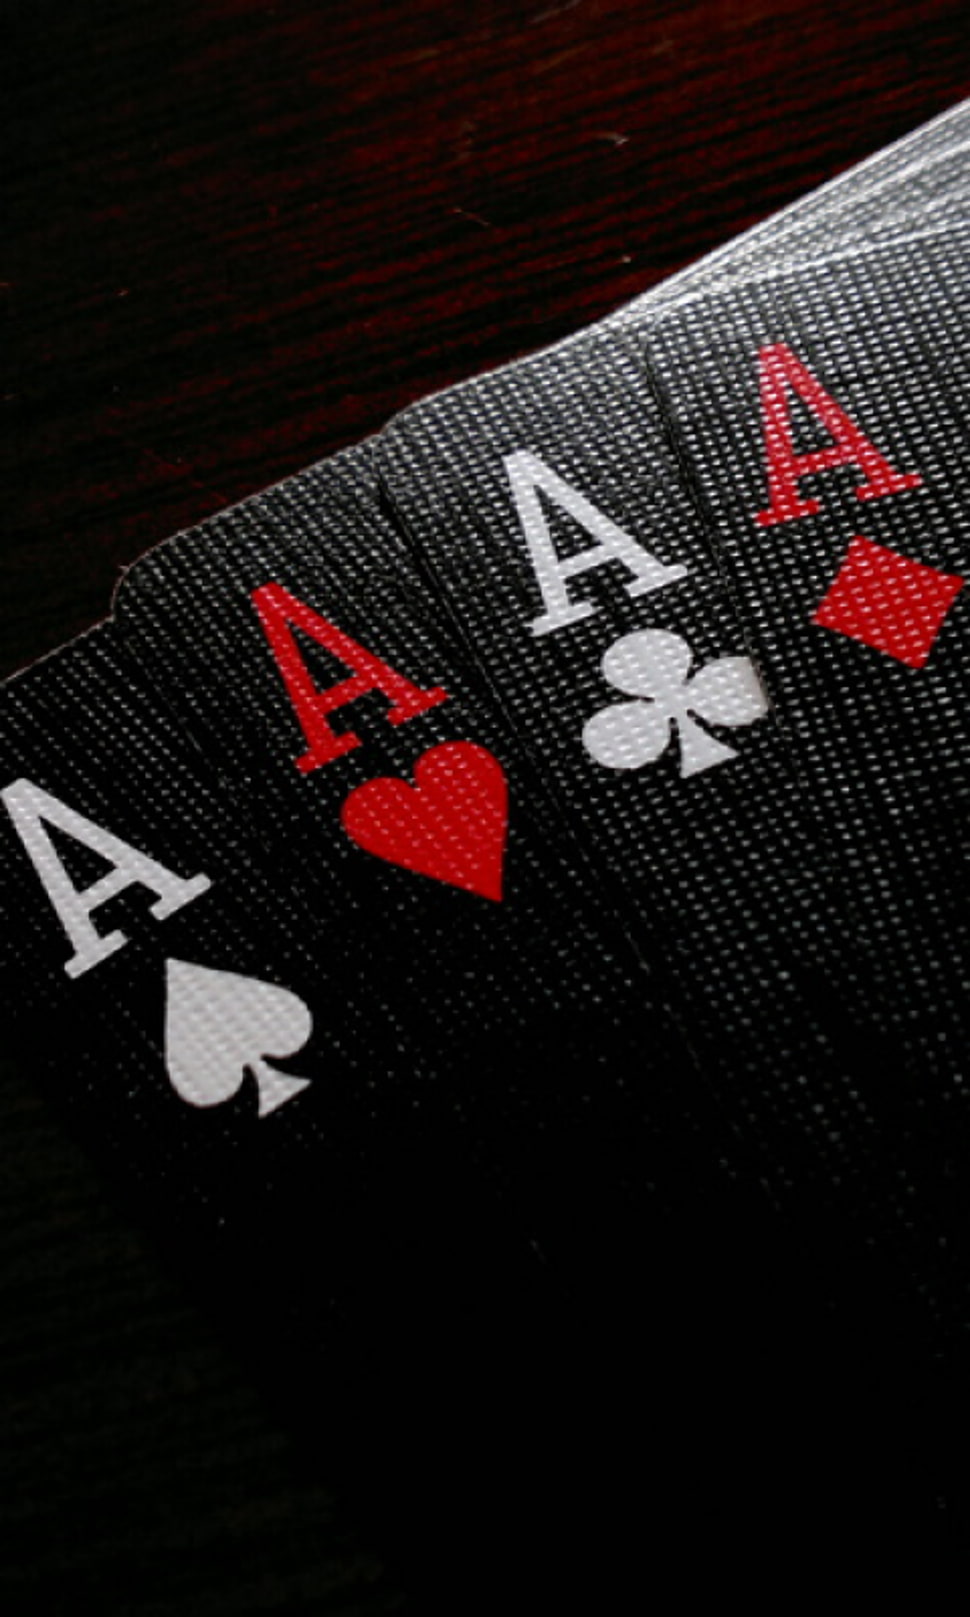 Ace Of Spade, Heart, Clubs And Diamond Playing Cards - Papel De Parede Celular Poker - HD Wallpaper 